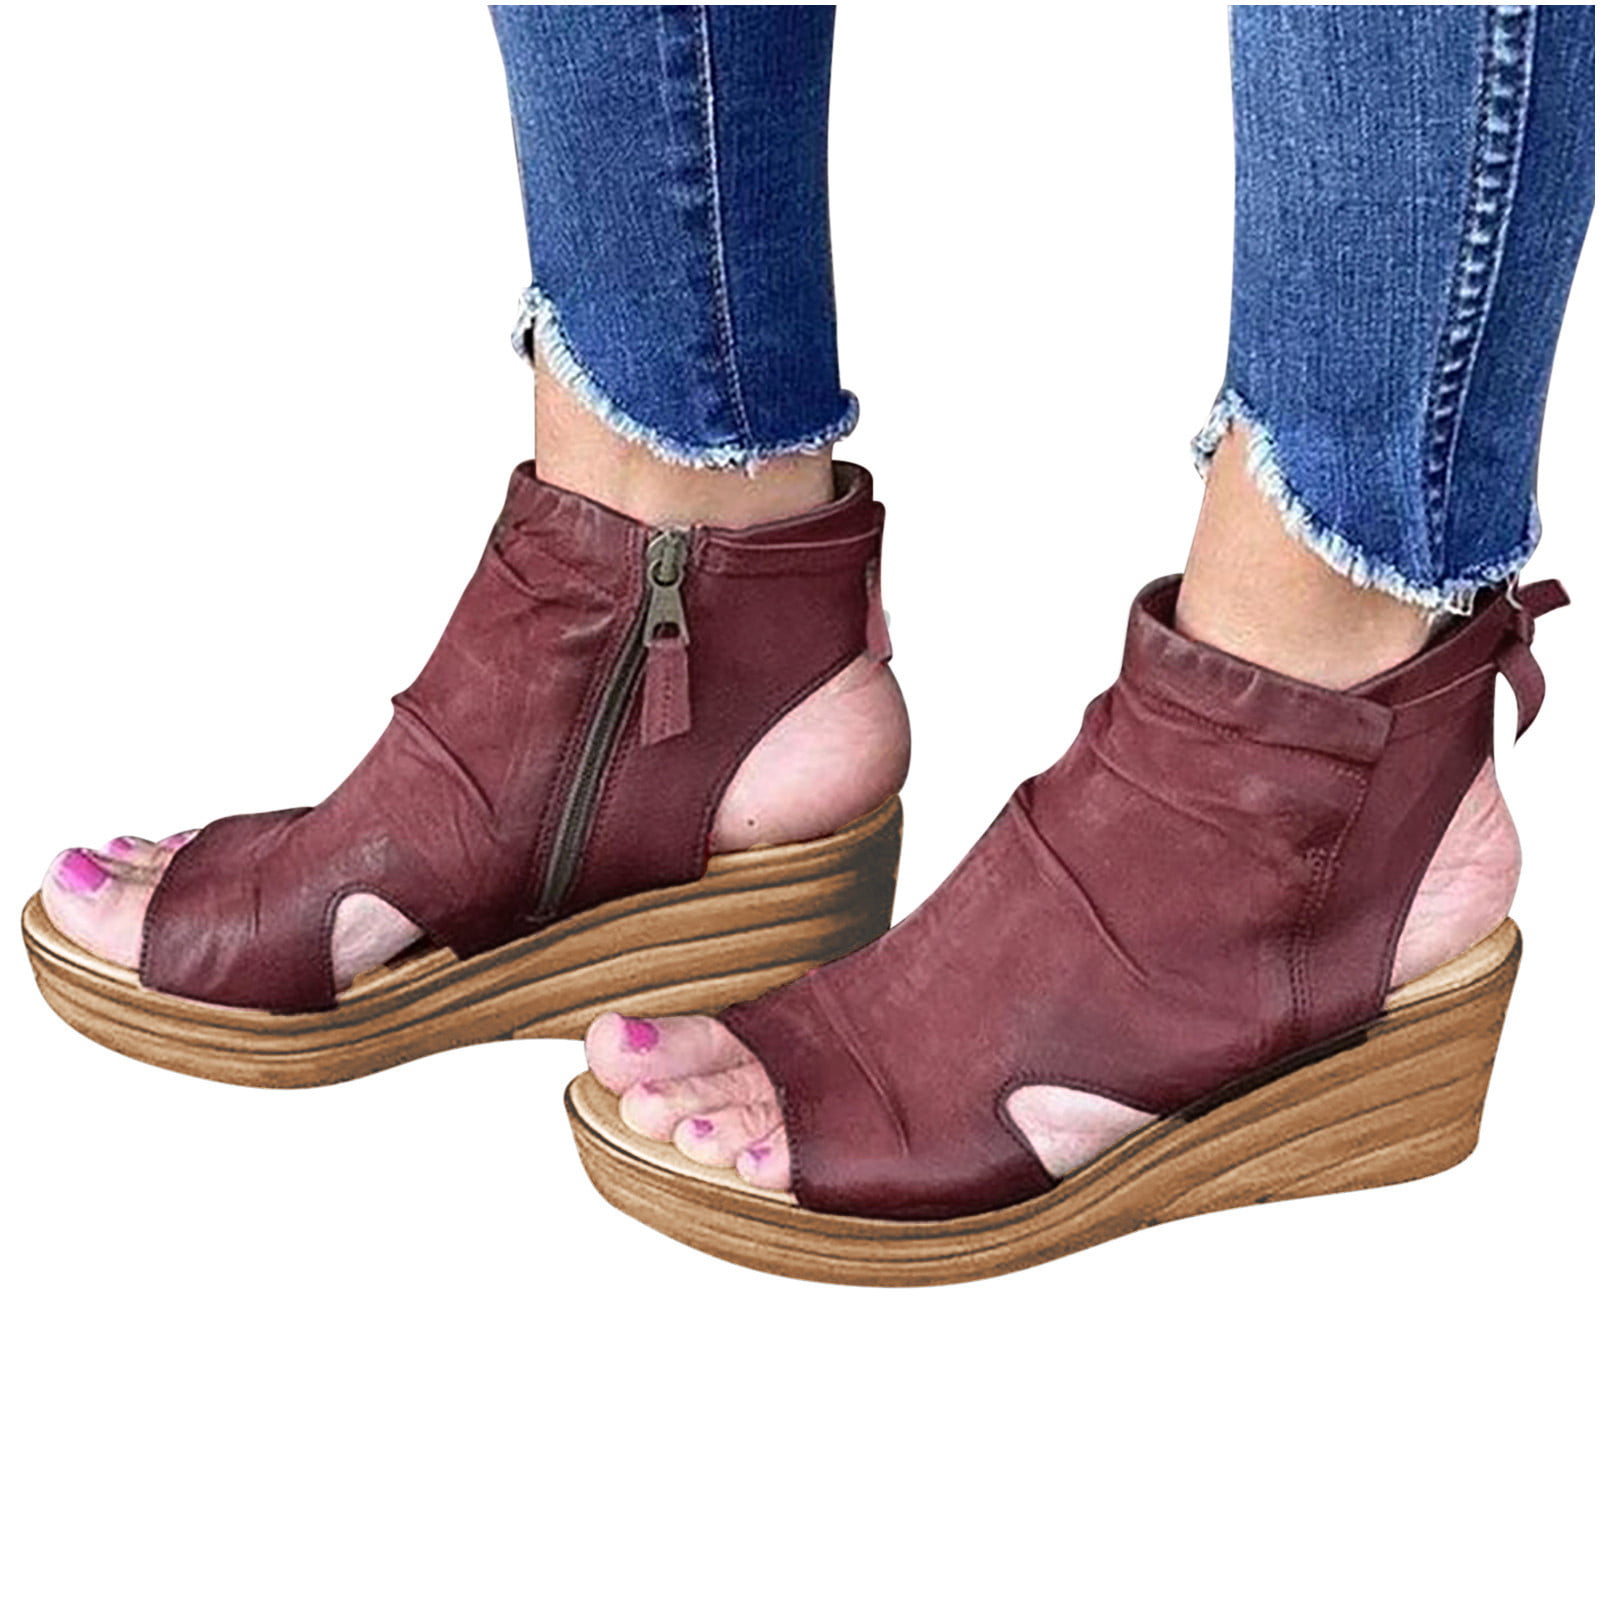 Hvyesh Clearance Sandals for Women Side Zipper Espadrilles Wedge ...